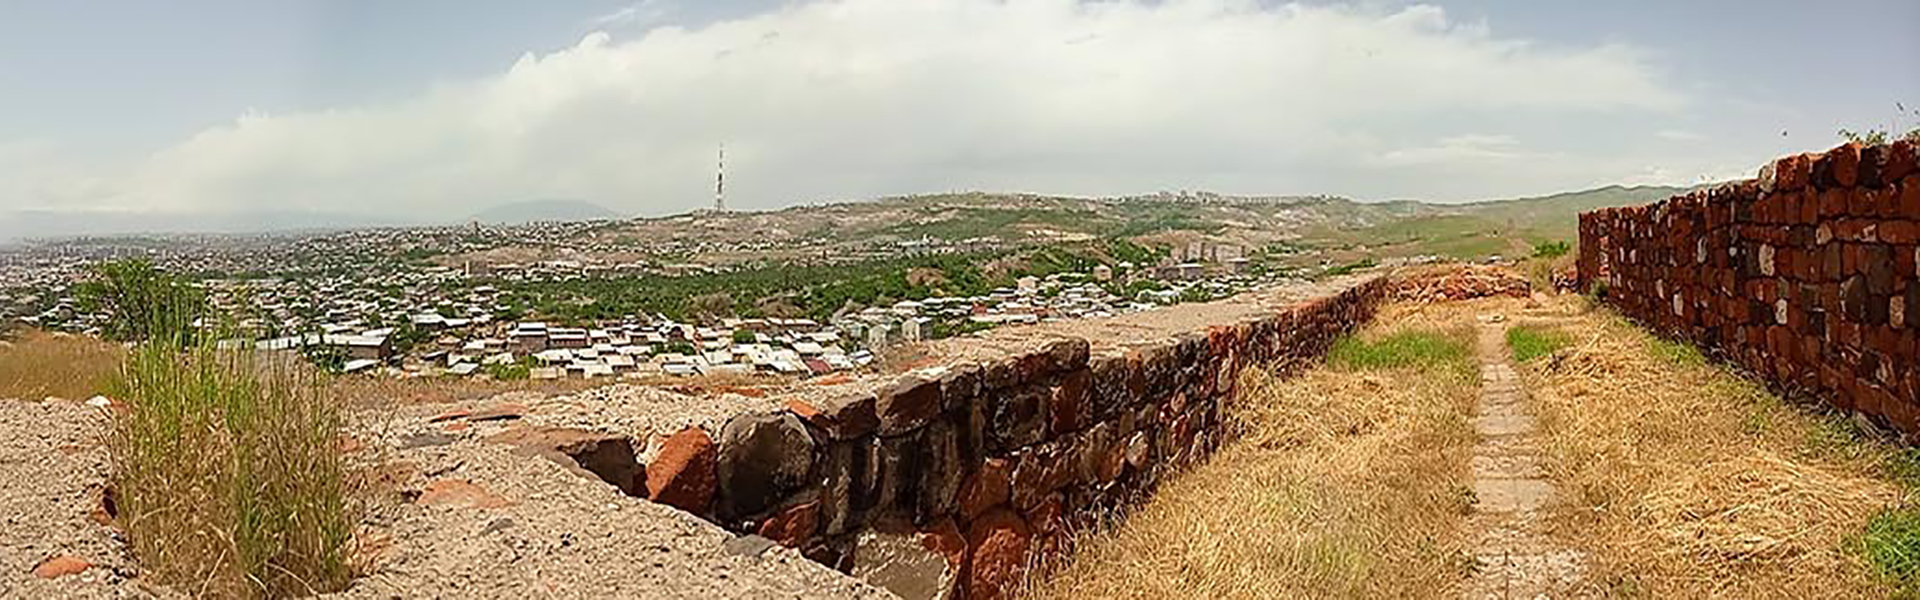 pid000314_Armenia_Erebuni_2019_05_View-of-City-Walls-Banner-Page-1920x600